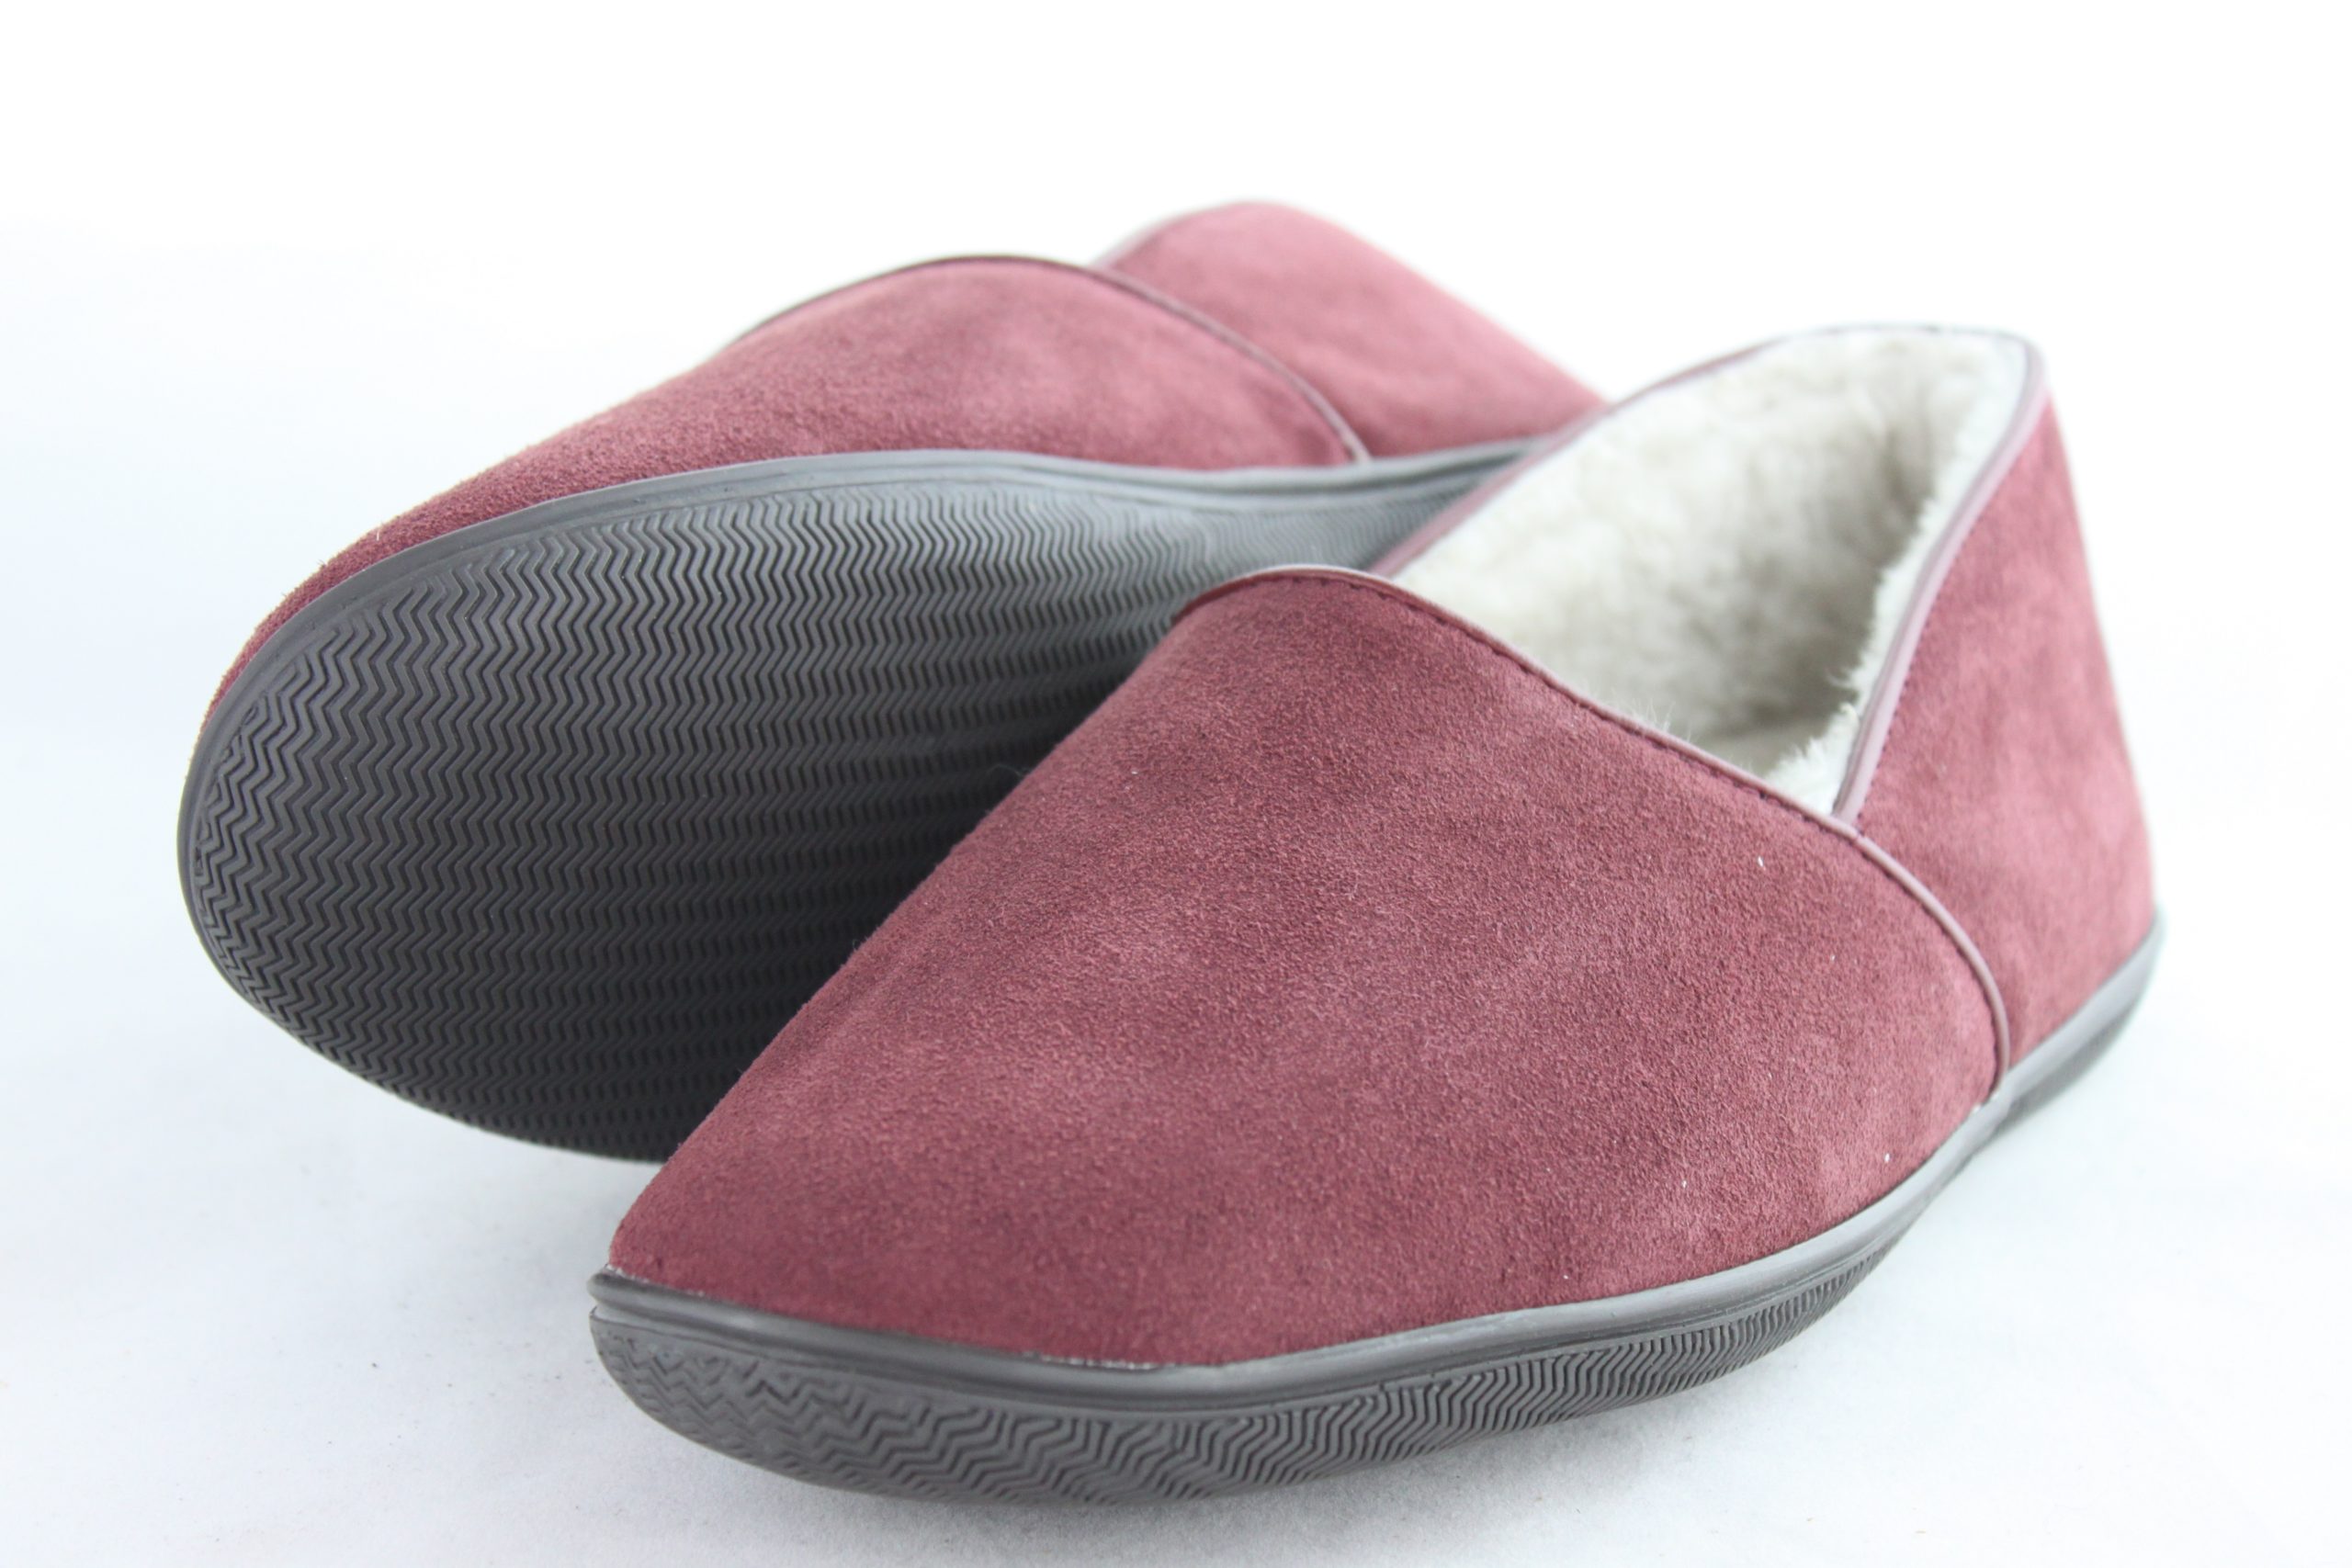 drapers sheepskin slippers